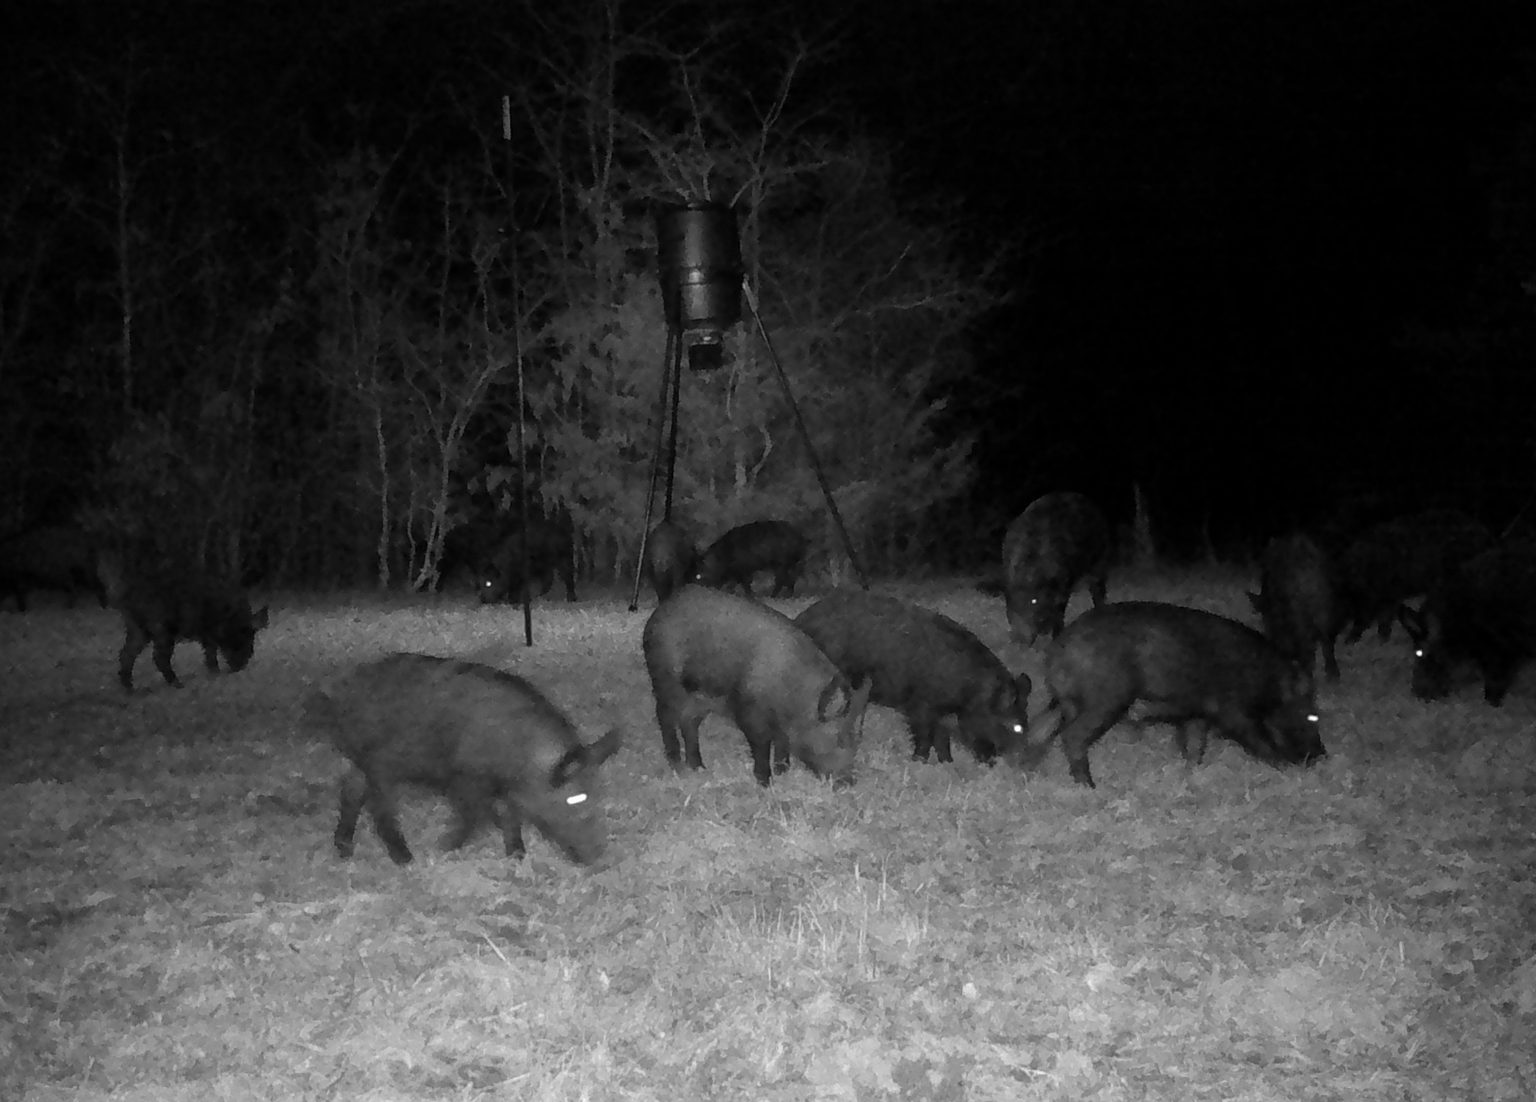 Free Range Texas Hog Hunting Location - 85 miles East of ...